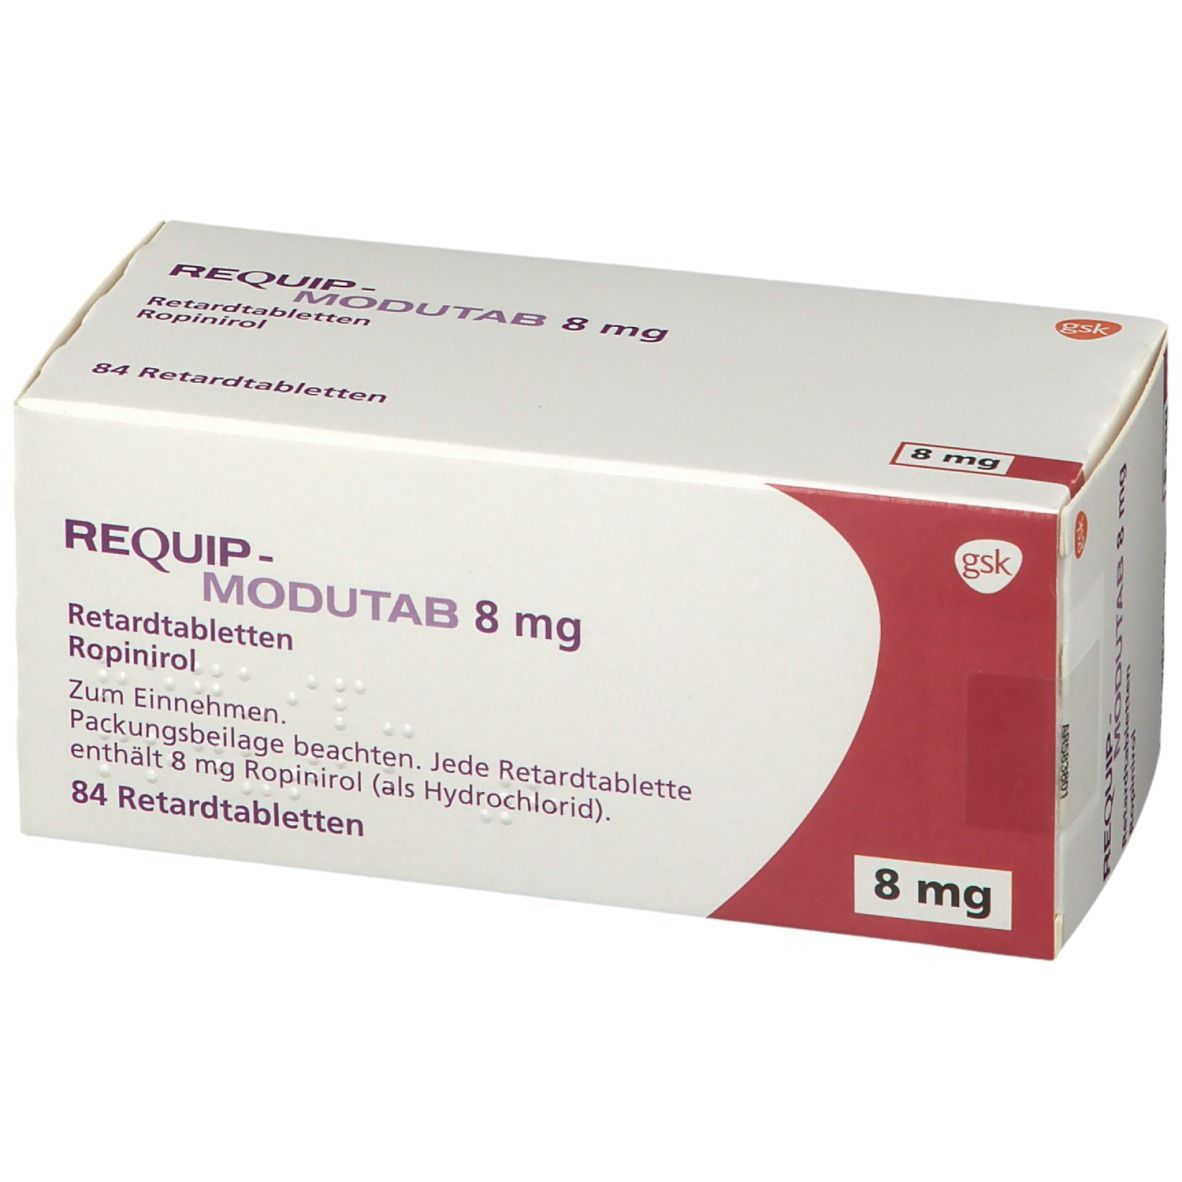 REQUIP® - MODUTAB® 8 mg